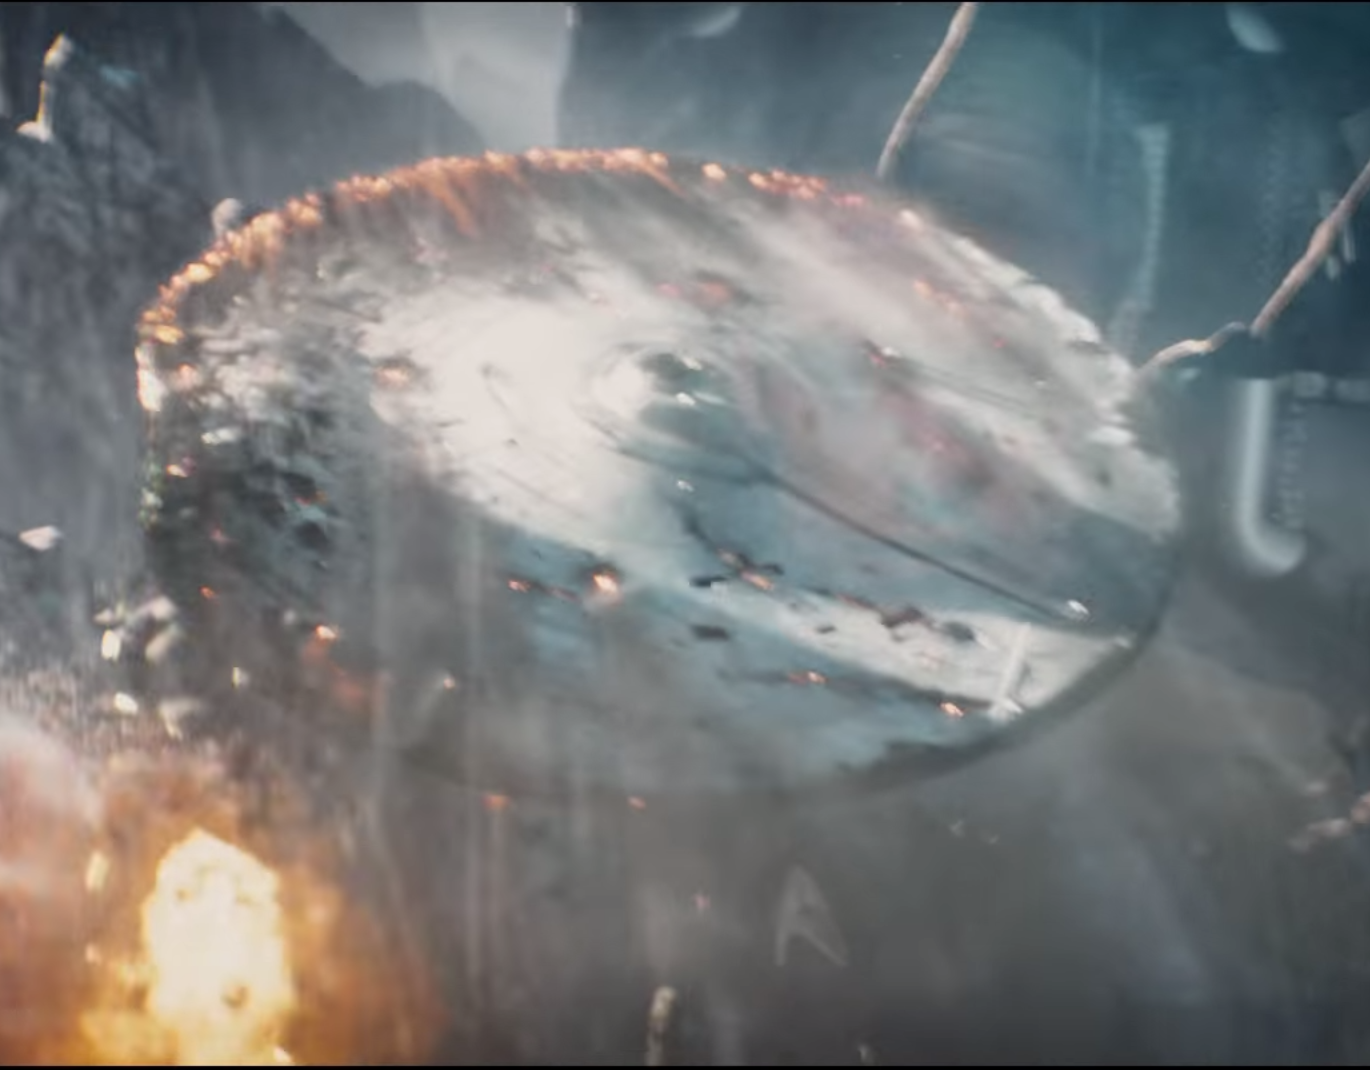 Watch The New, Explosion-Filled ‘Star Trek Beyond’ Trailer